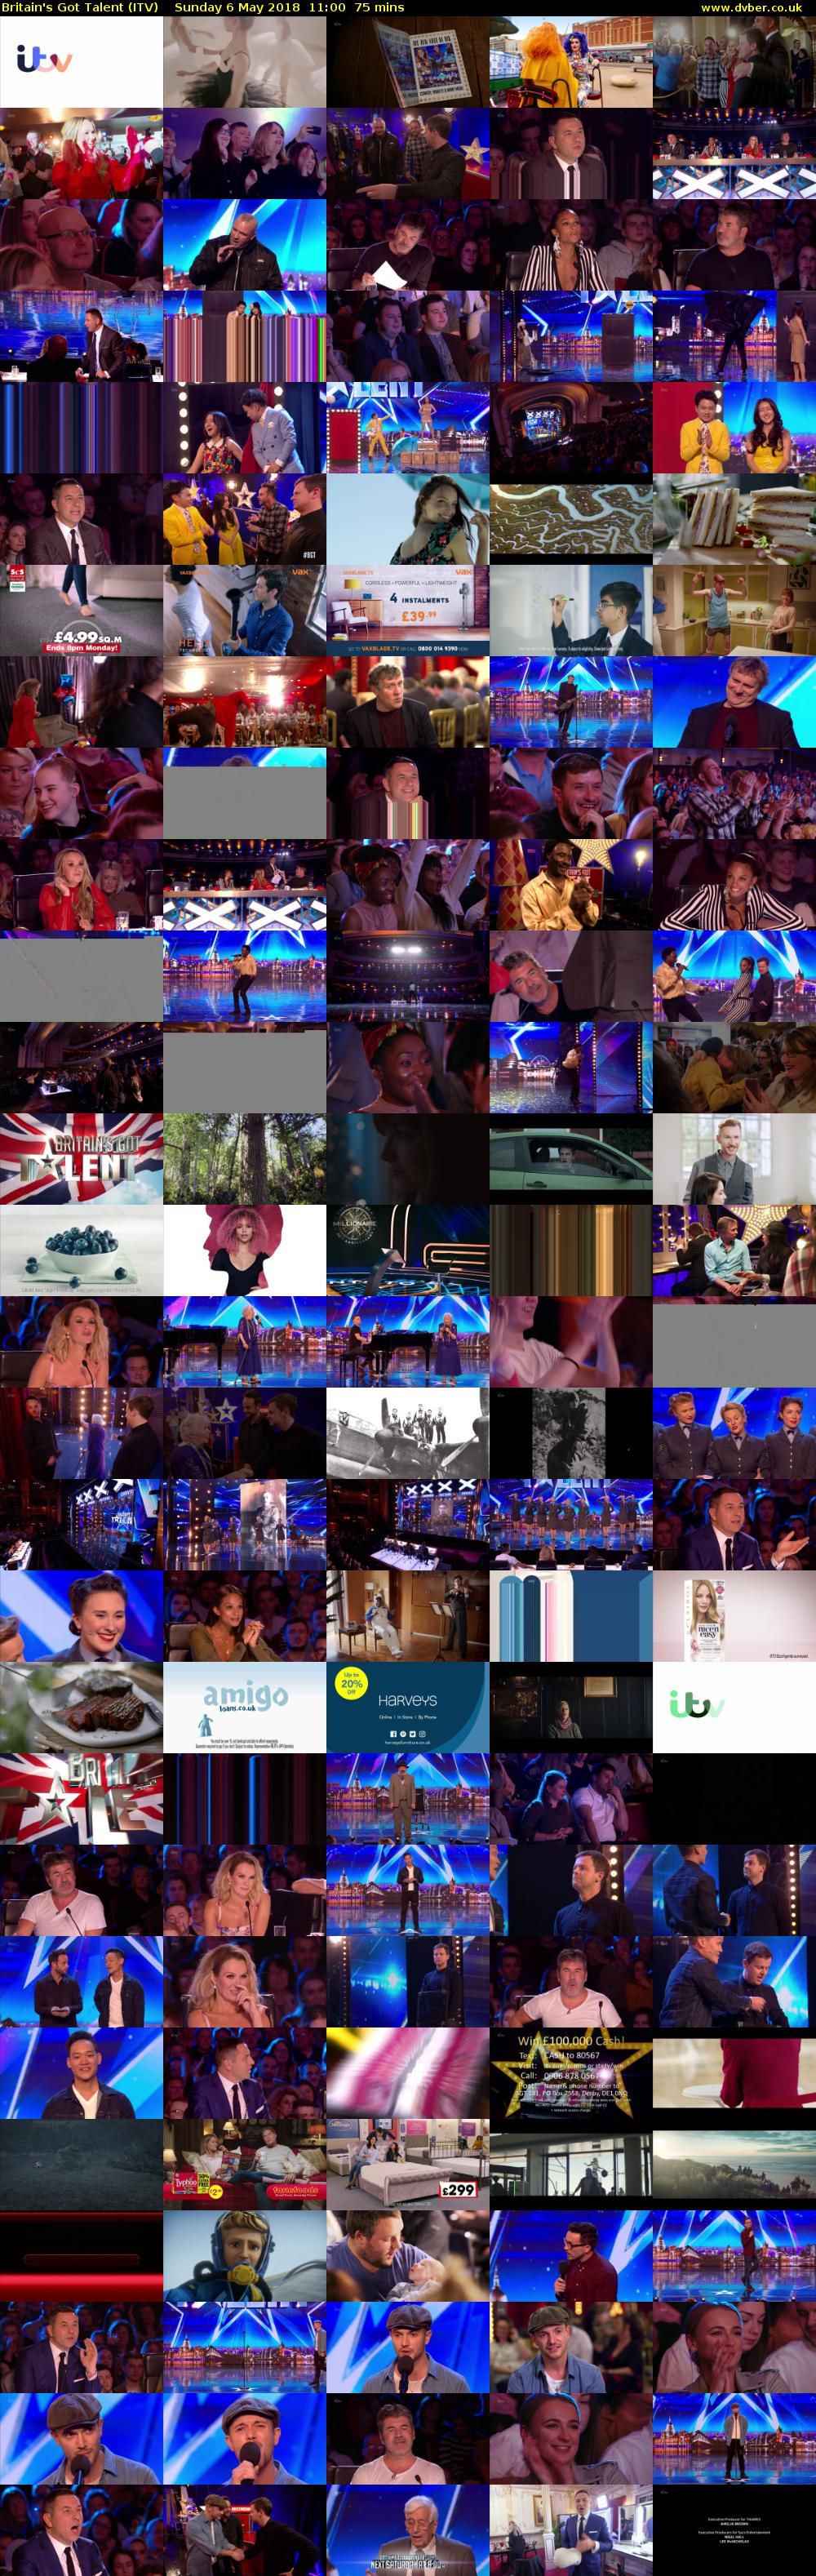 Britain's Got Talent (ITV) Sunday 6 May 2018 11:00 - 12:15